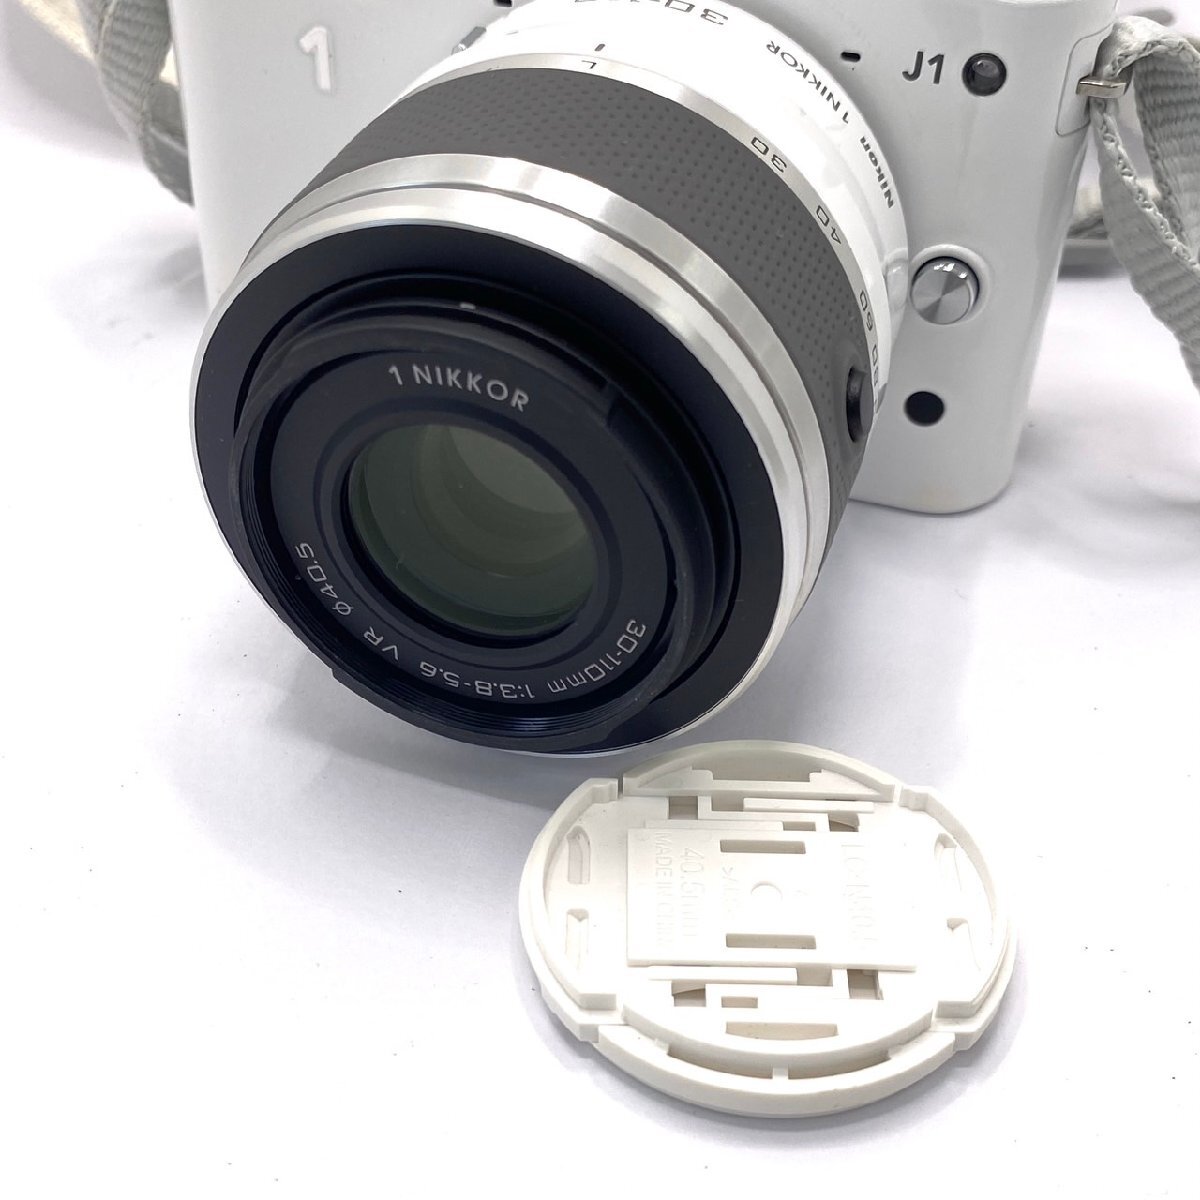 1 jpy start Nikon Nikon 1 J1 digital camera lens exchange type NIKKOR VR 30-110mm 10-30mm digital camera white box attaching consumer electronics electrification has confirmed 